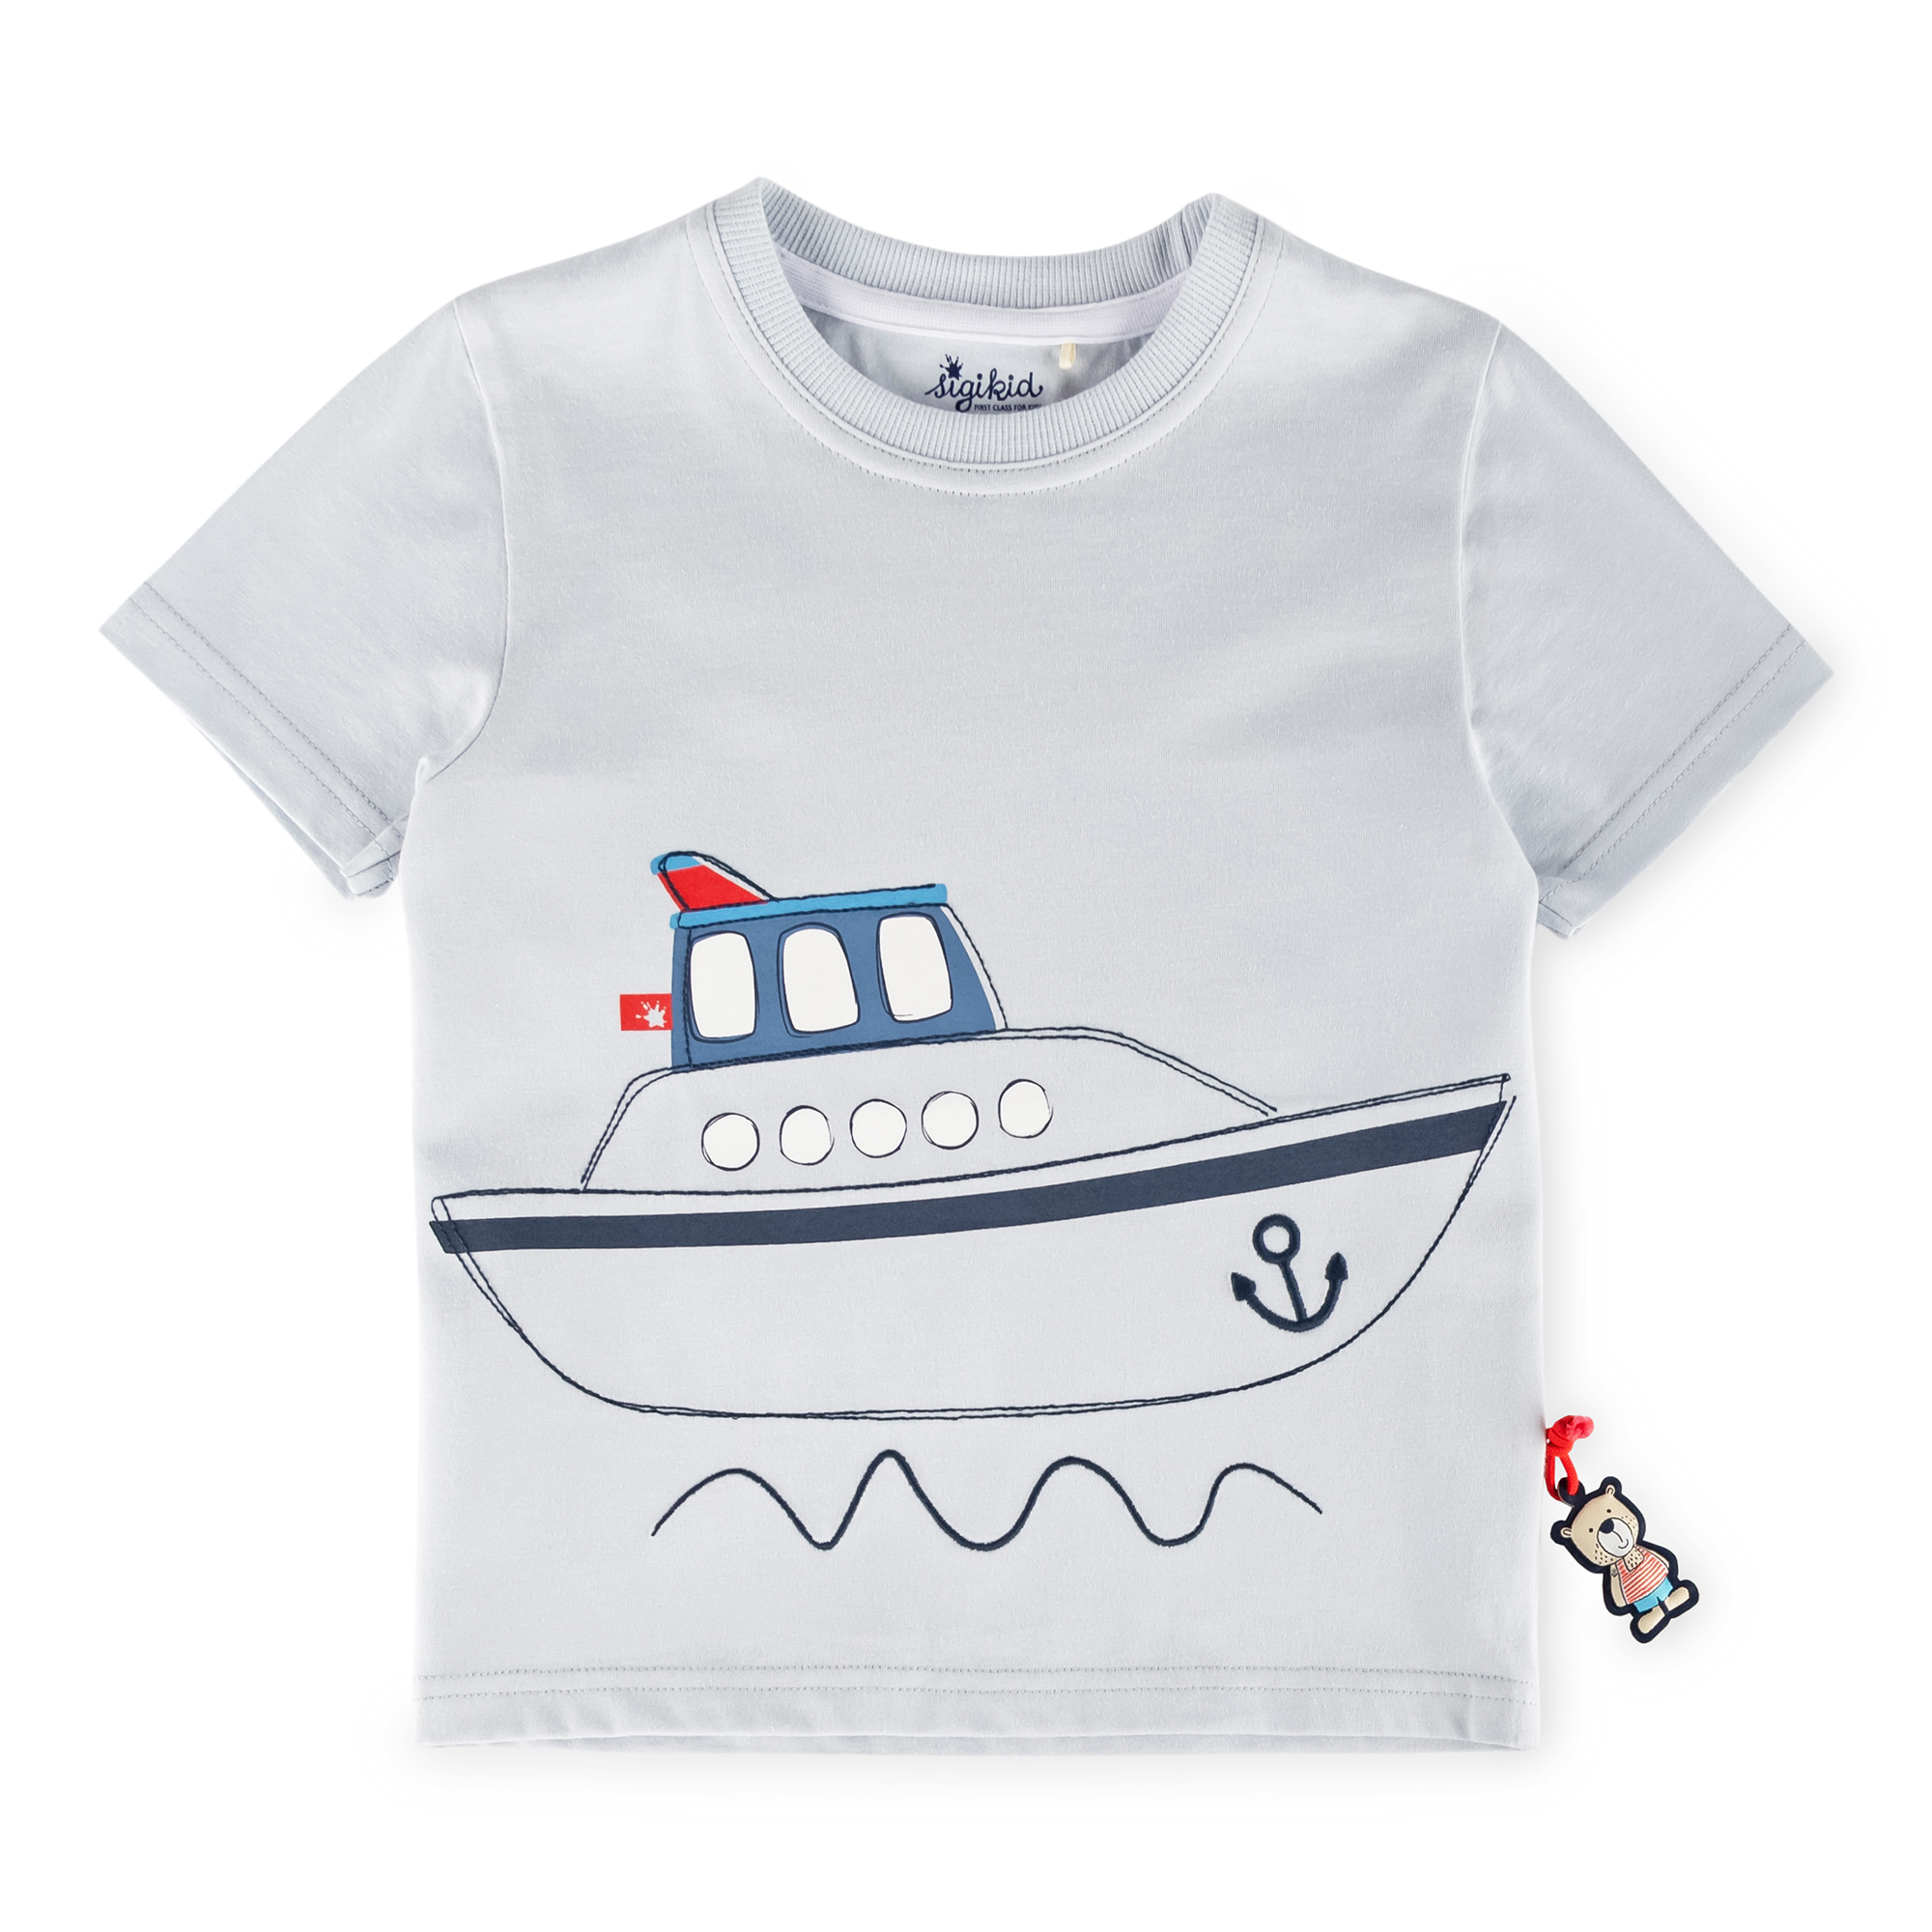 Kinder T-Shirt mit Boot Motiv, hellblau